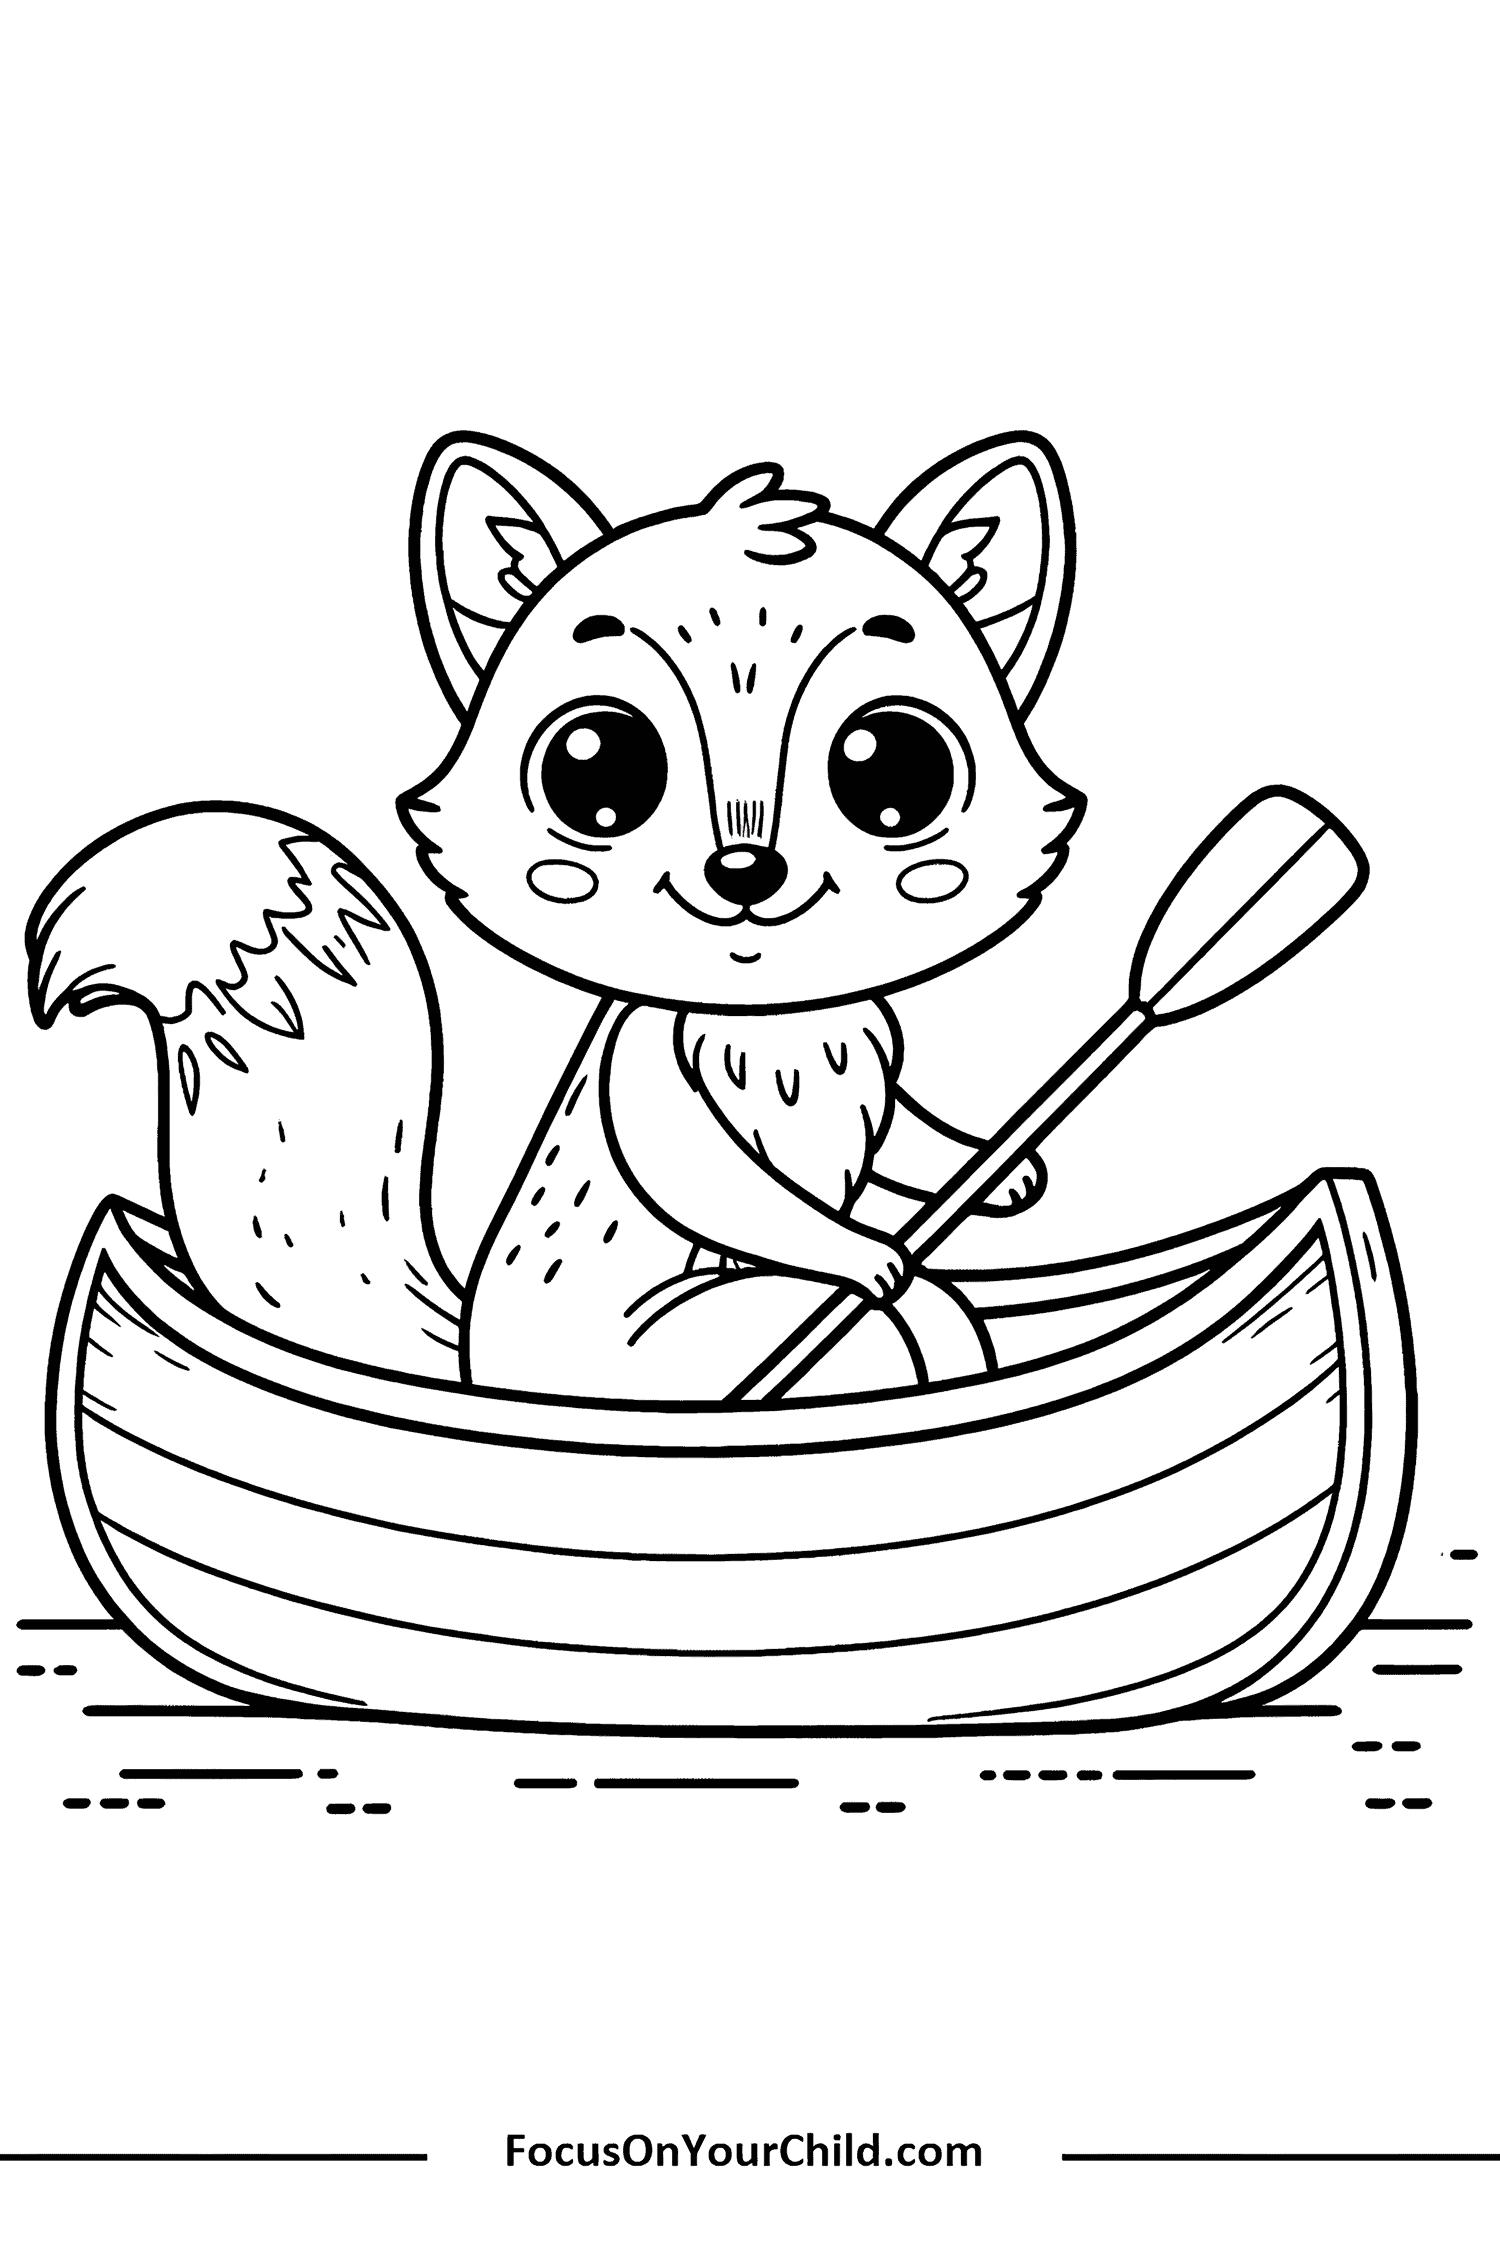 Charming cartoon fox rowing a boat on calm water.